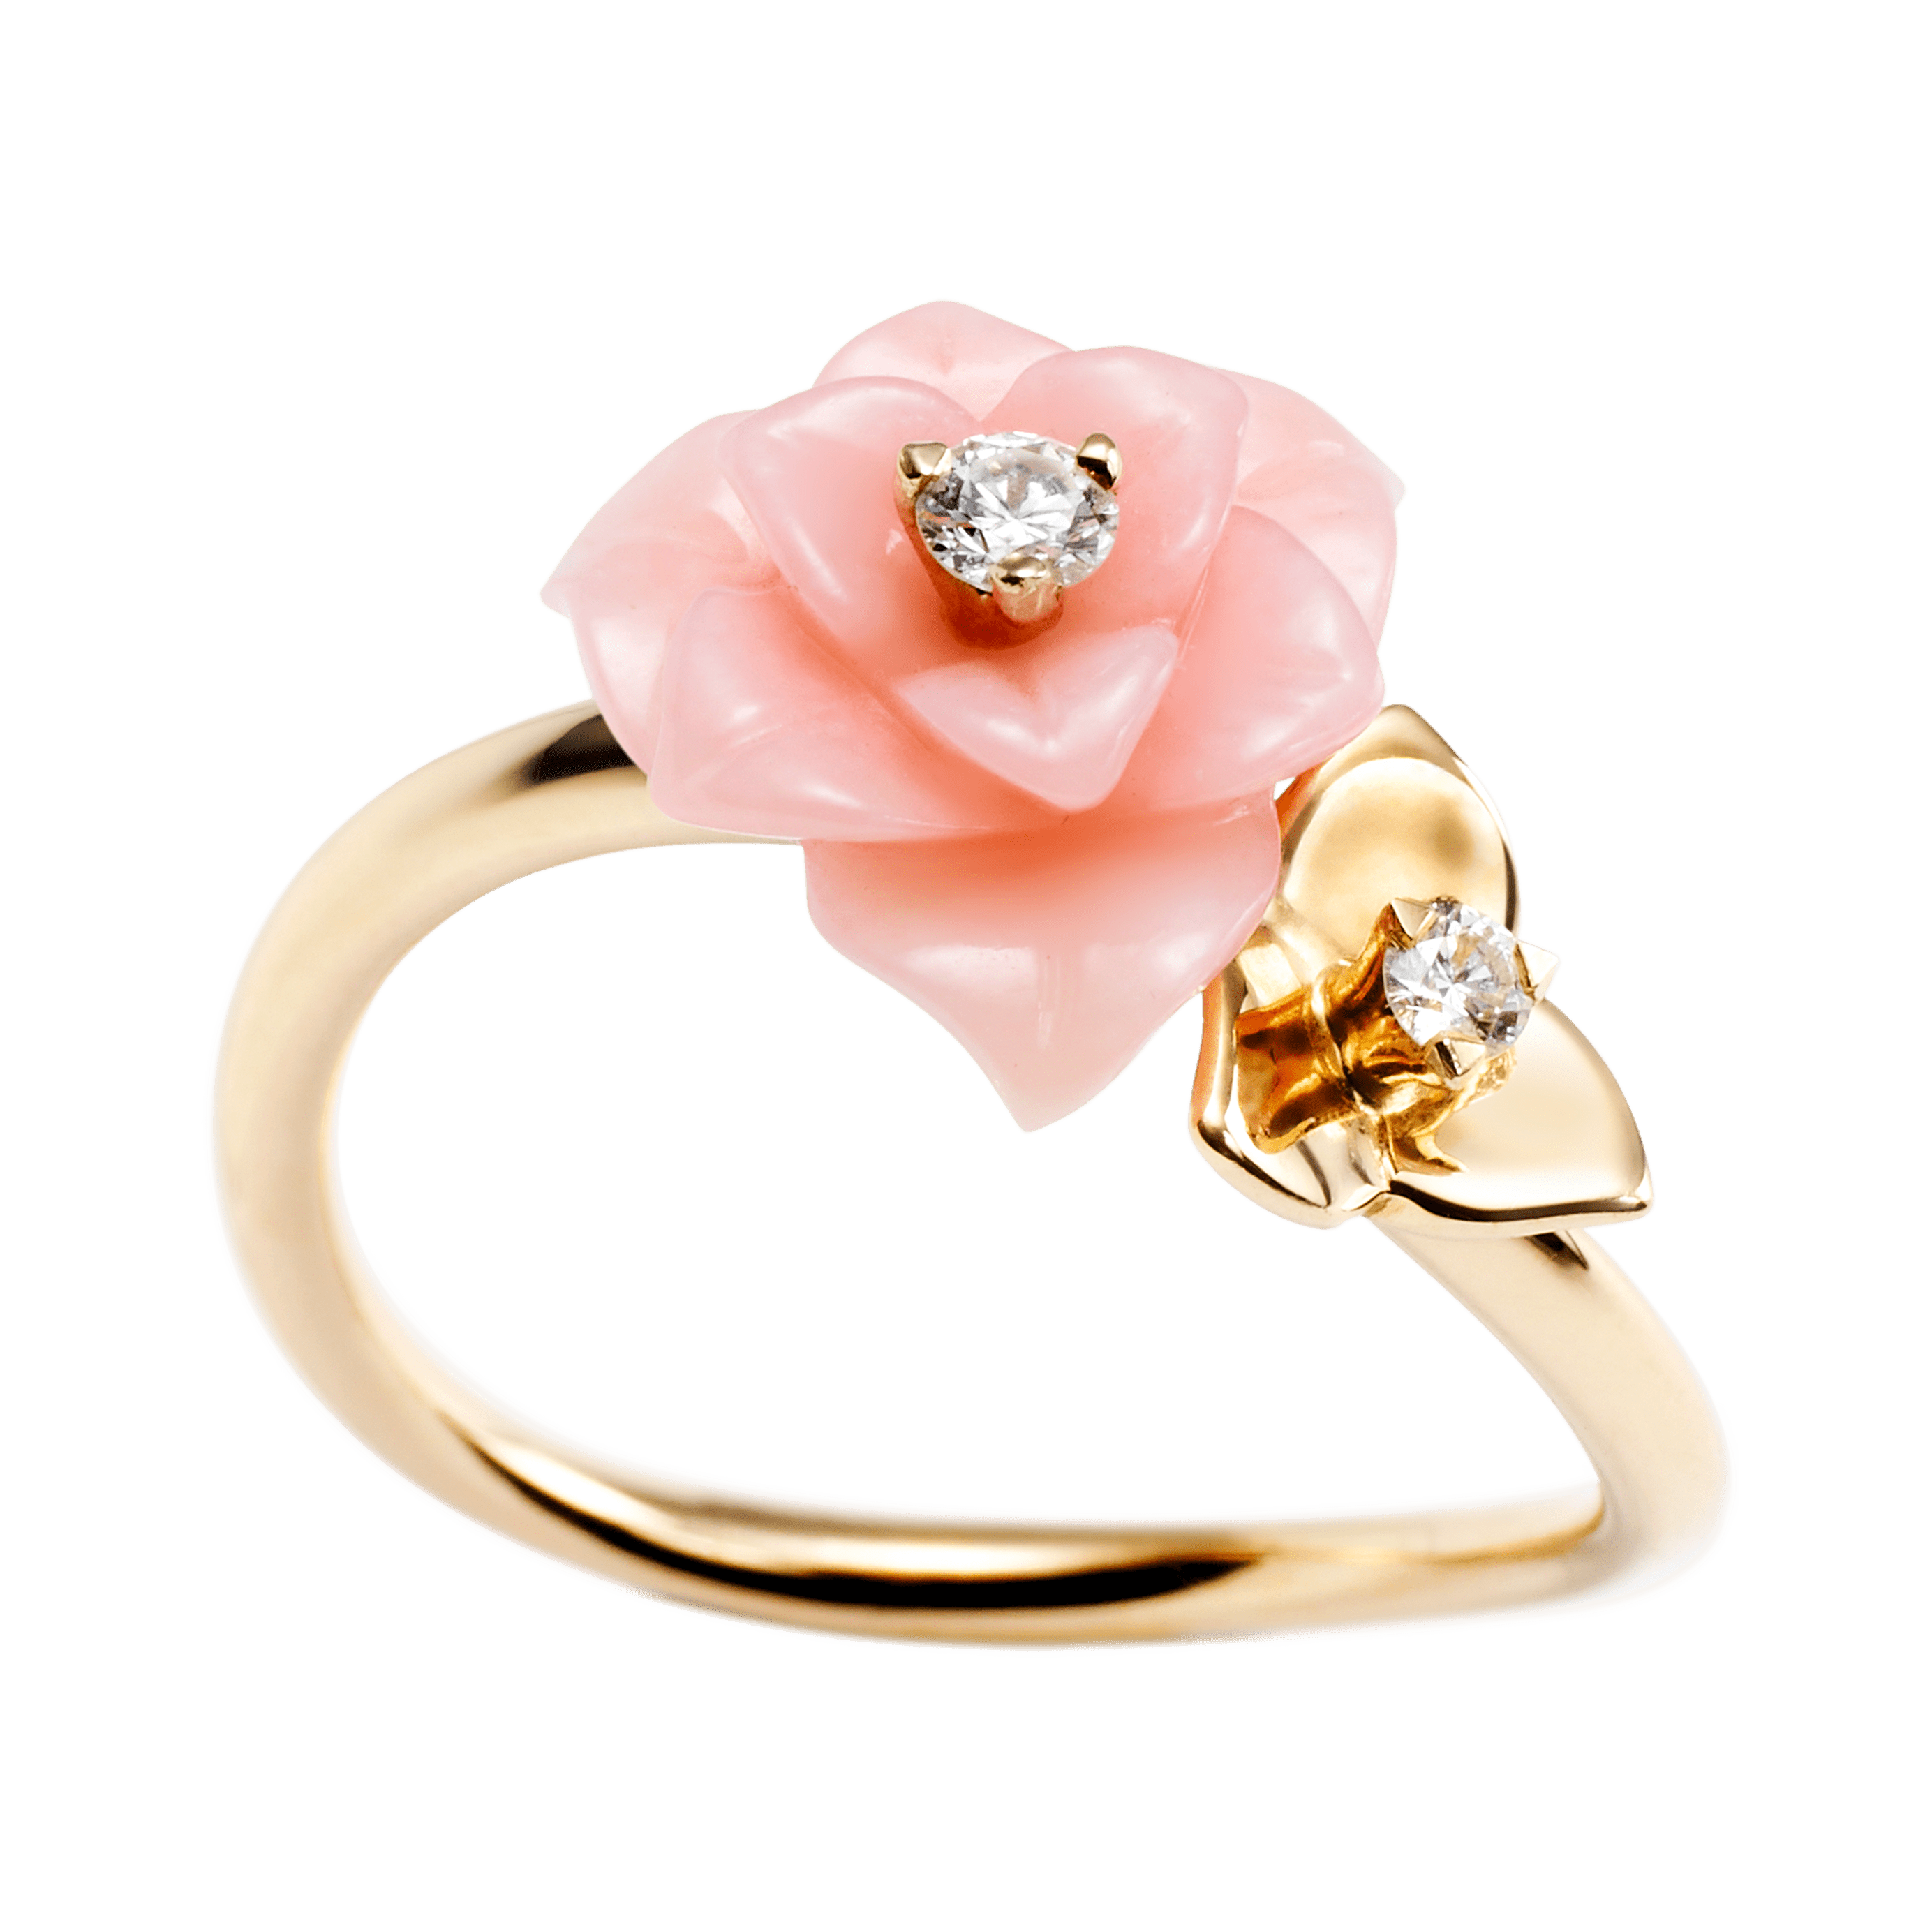 Rose gold Opal Diamond Ring G34UR600 - Piaget Luxury Jewelry Online